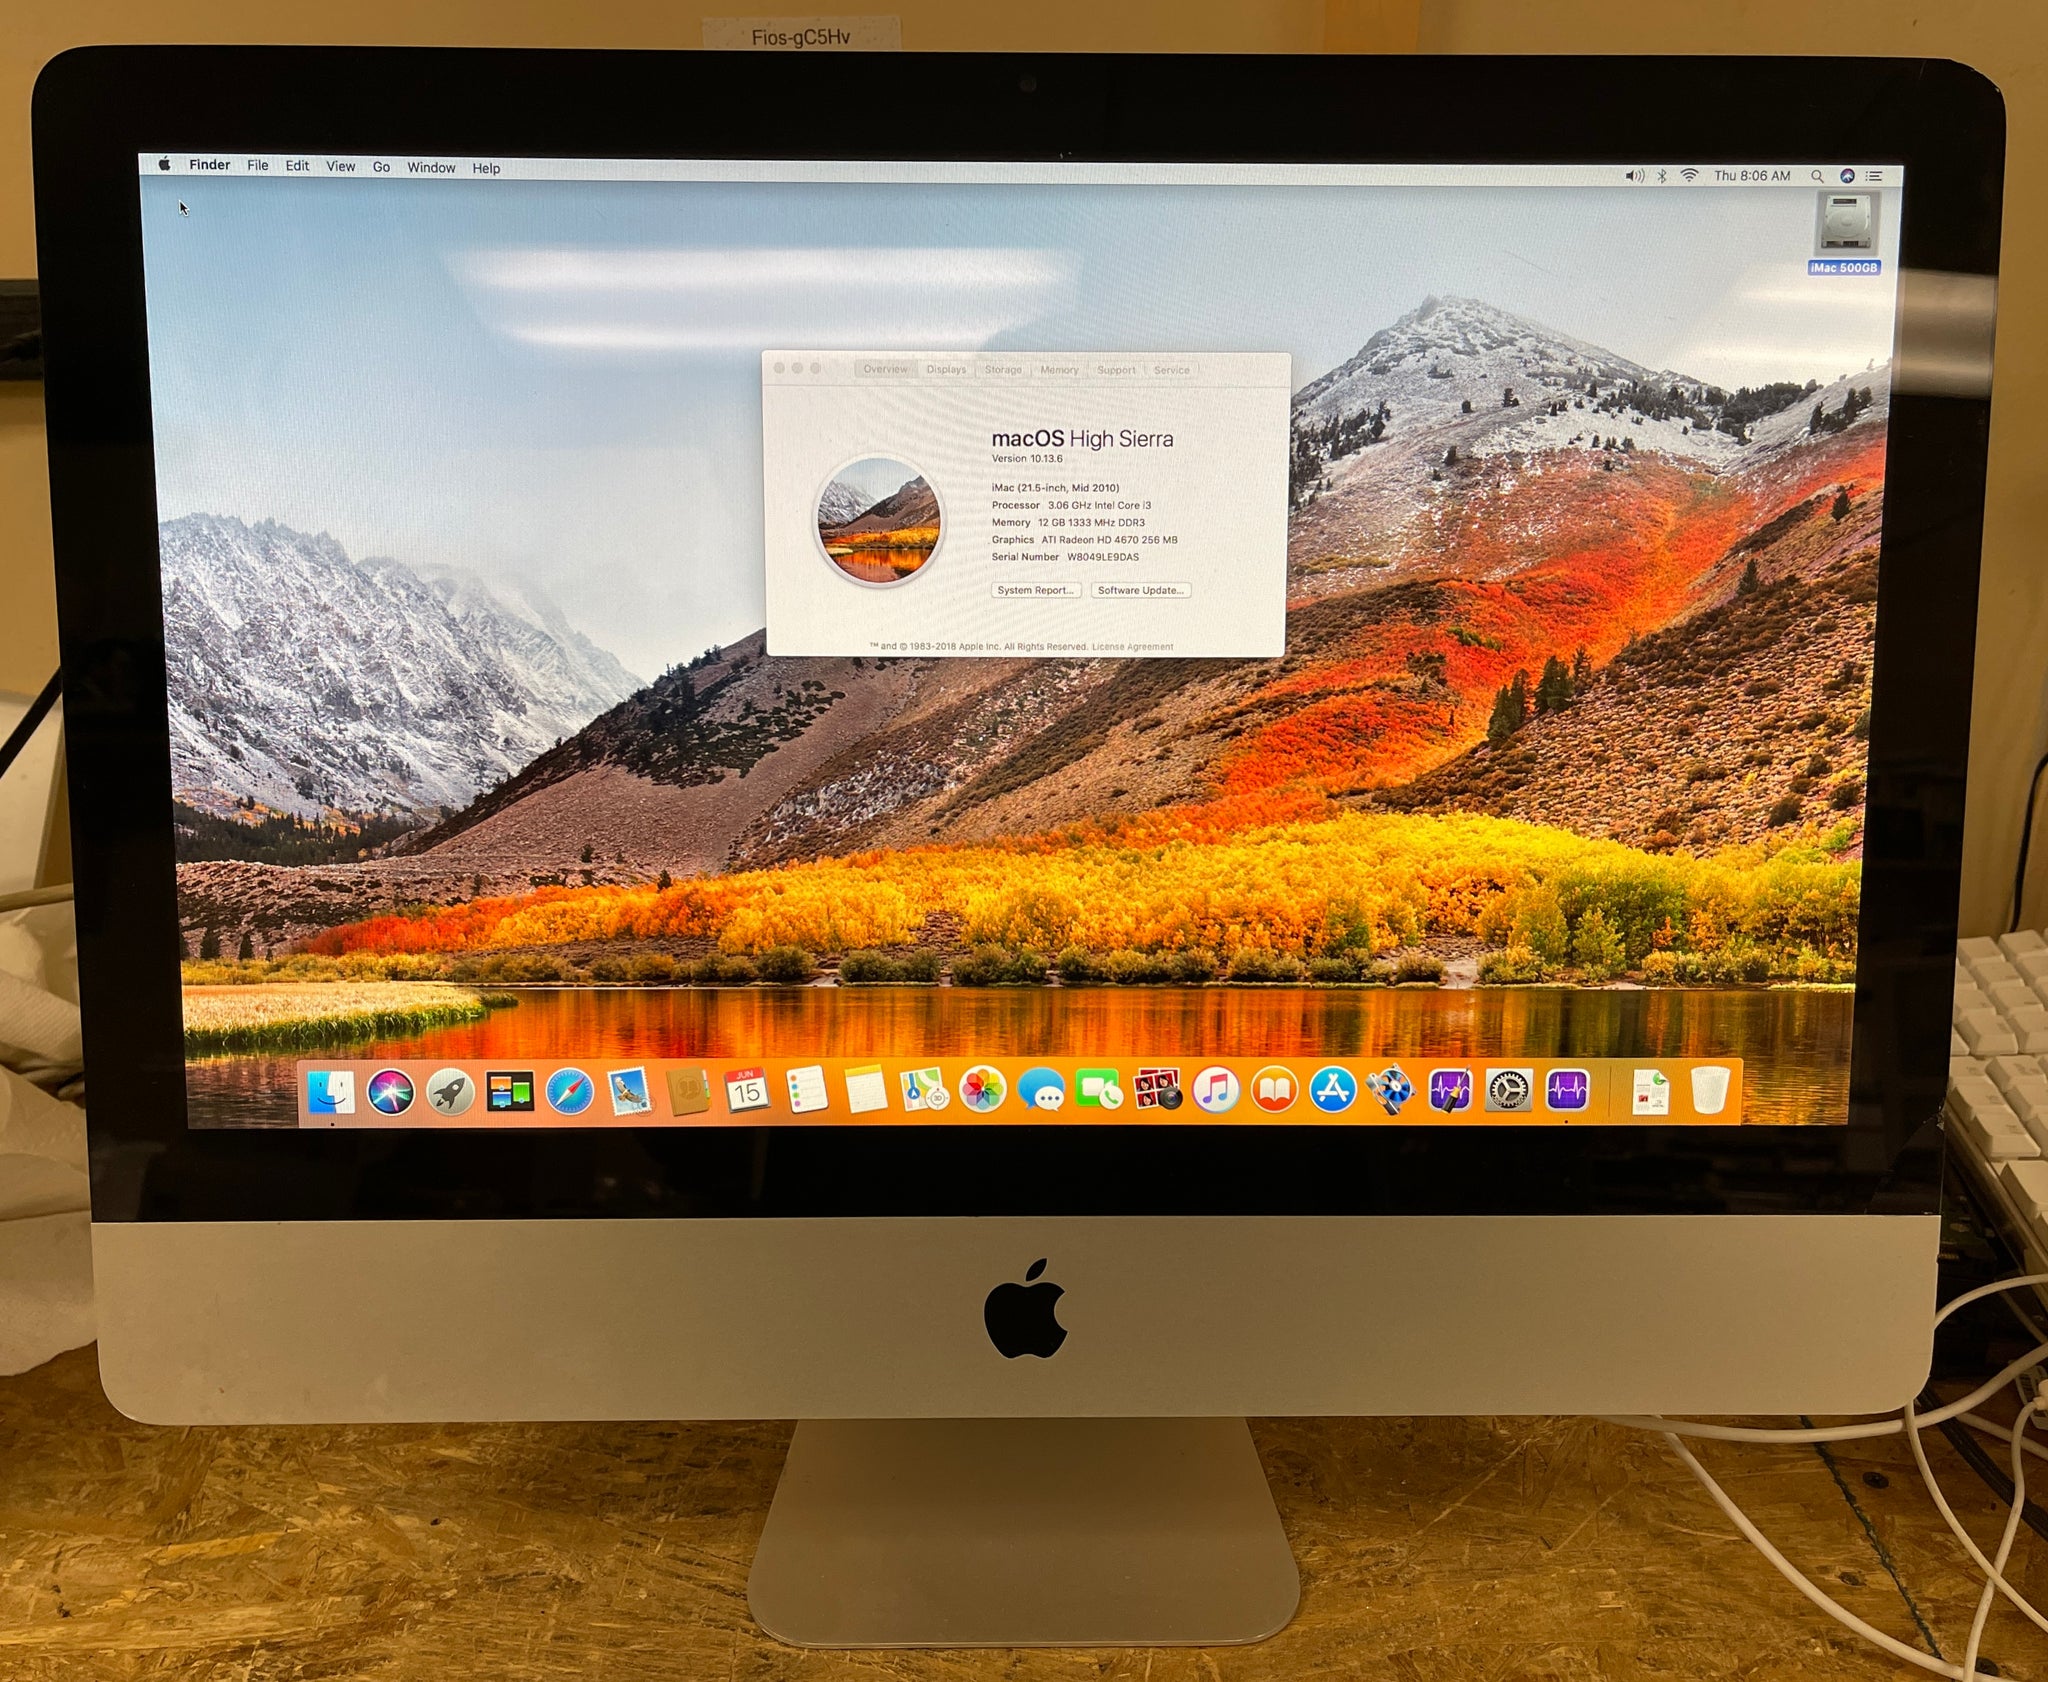 Apple iMac 21.5inch Mid2010